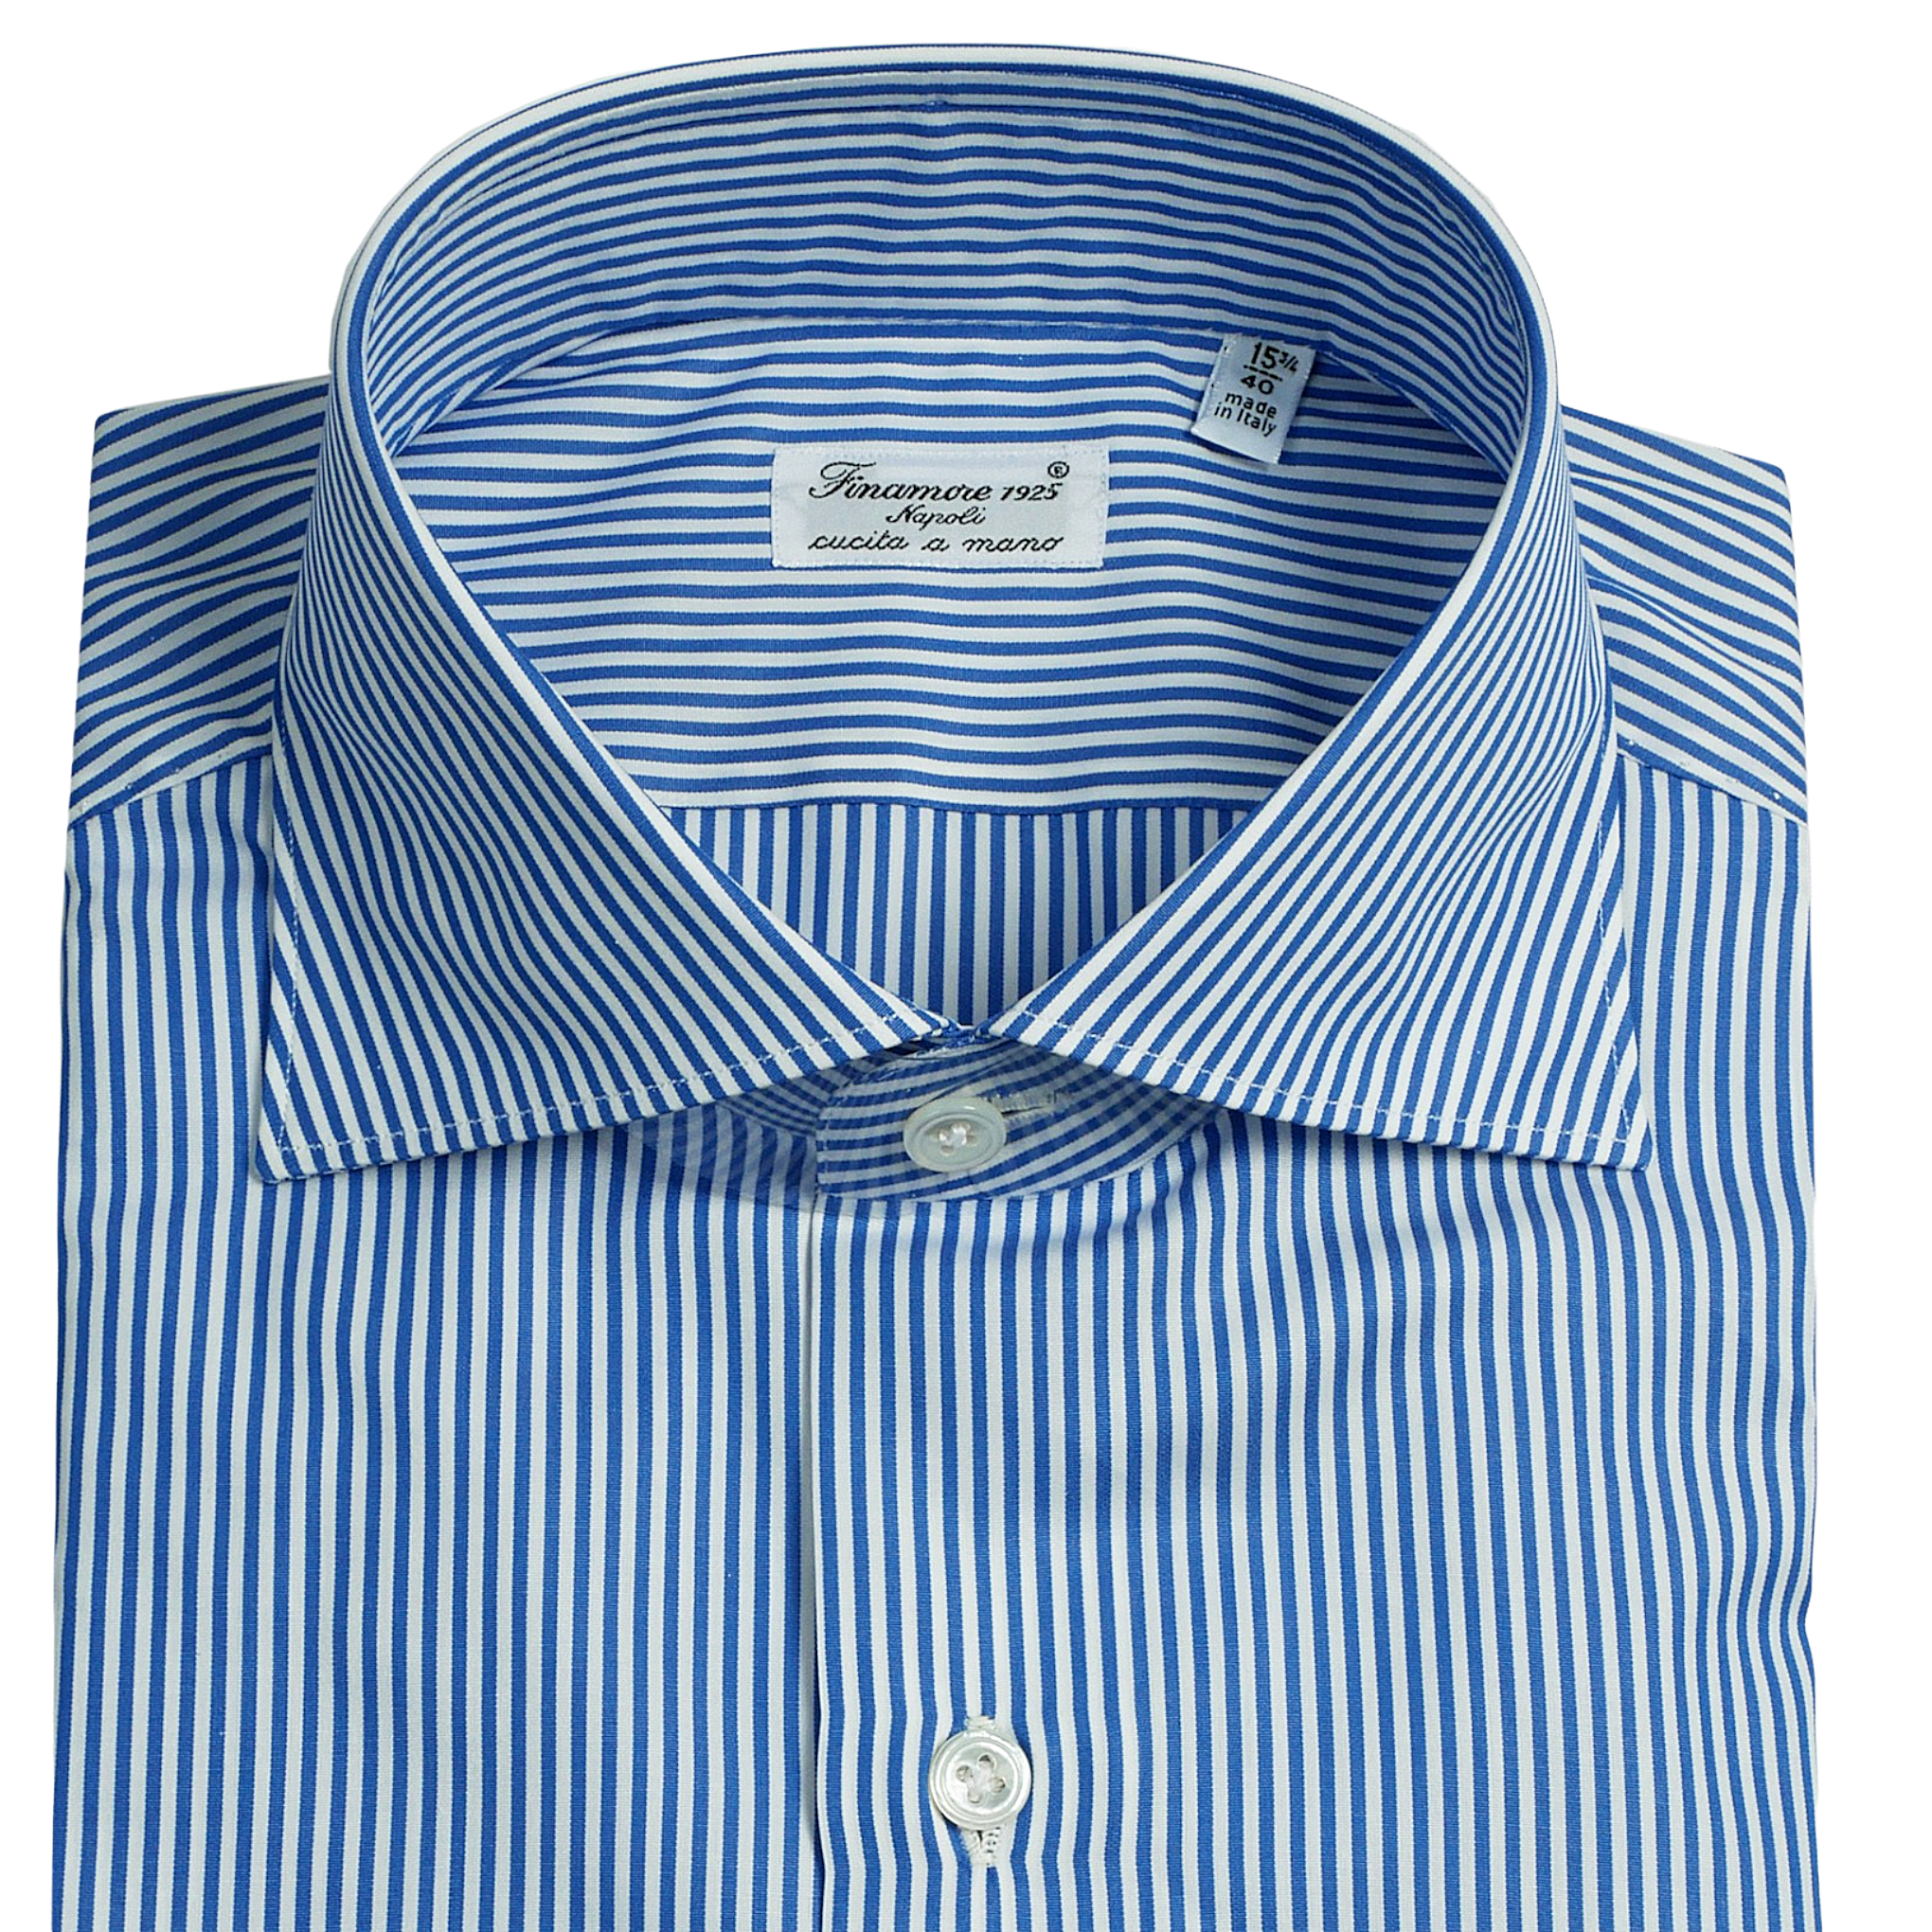 Dress shirt Milano slim fit stripe light blue Finamore 1925